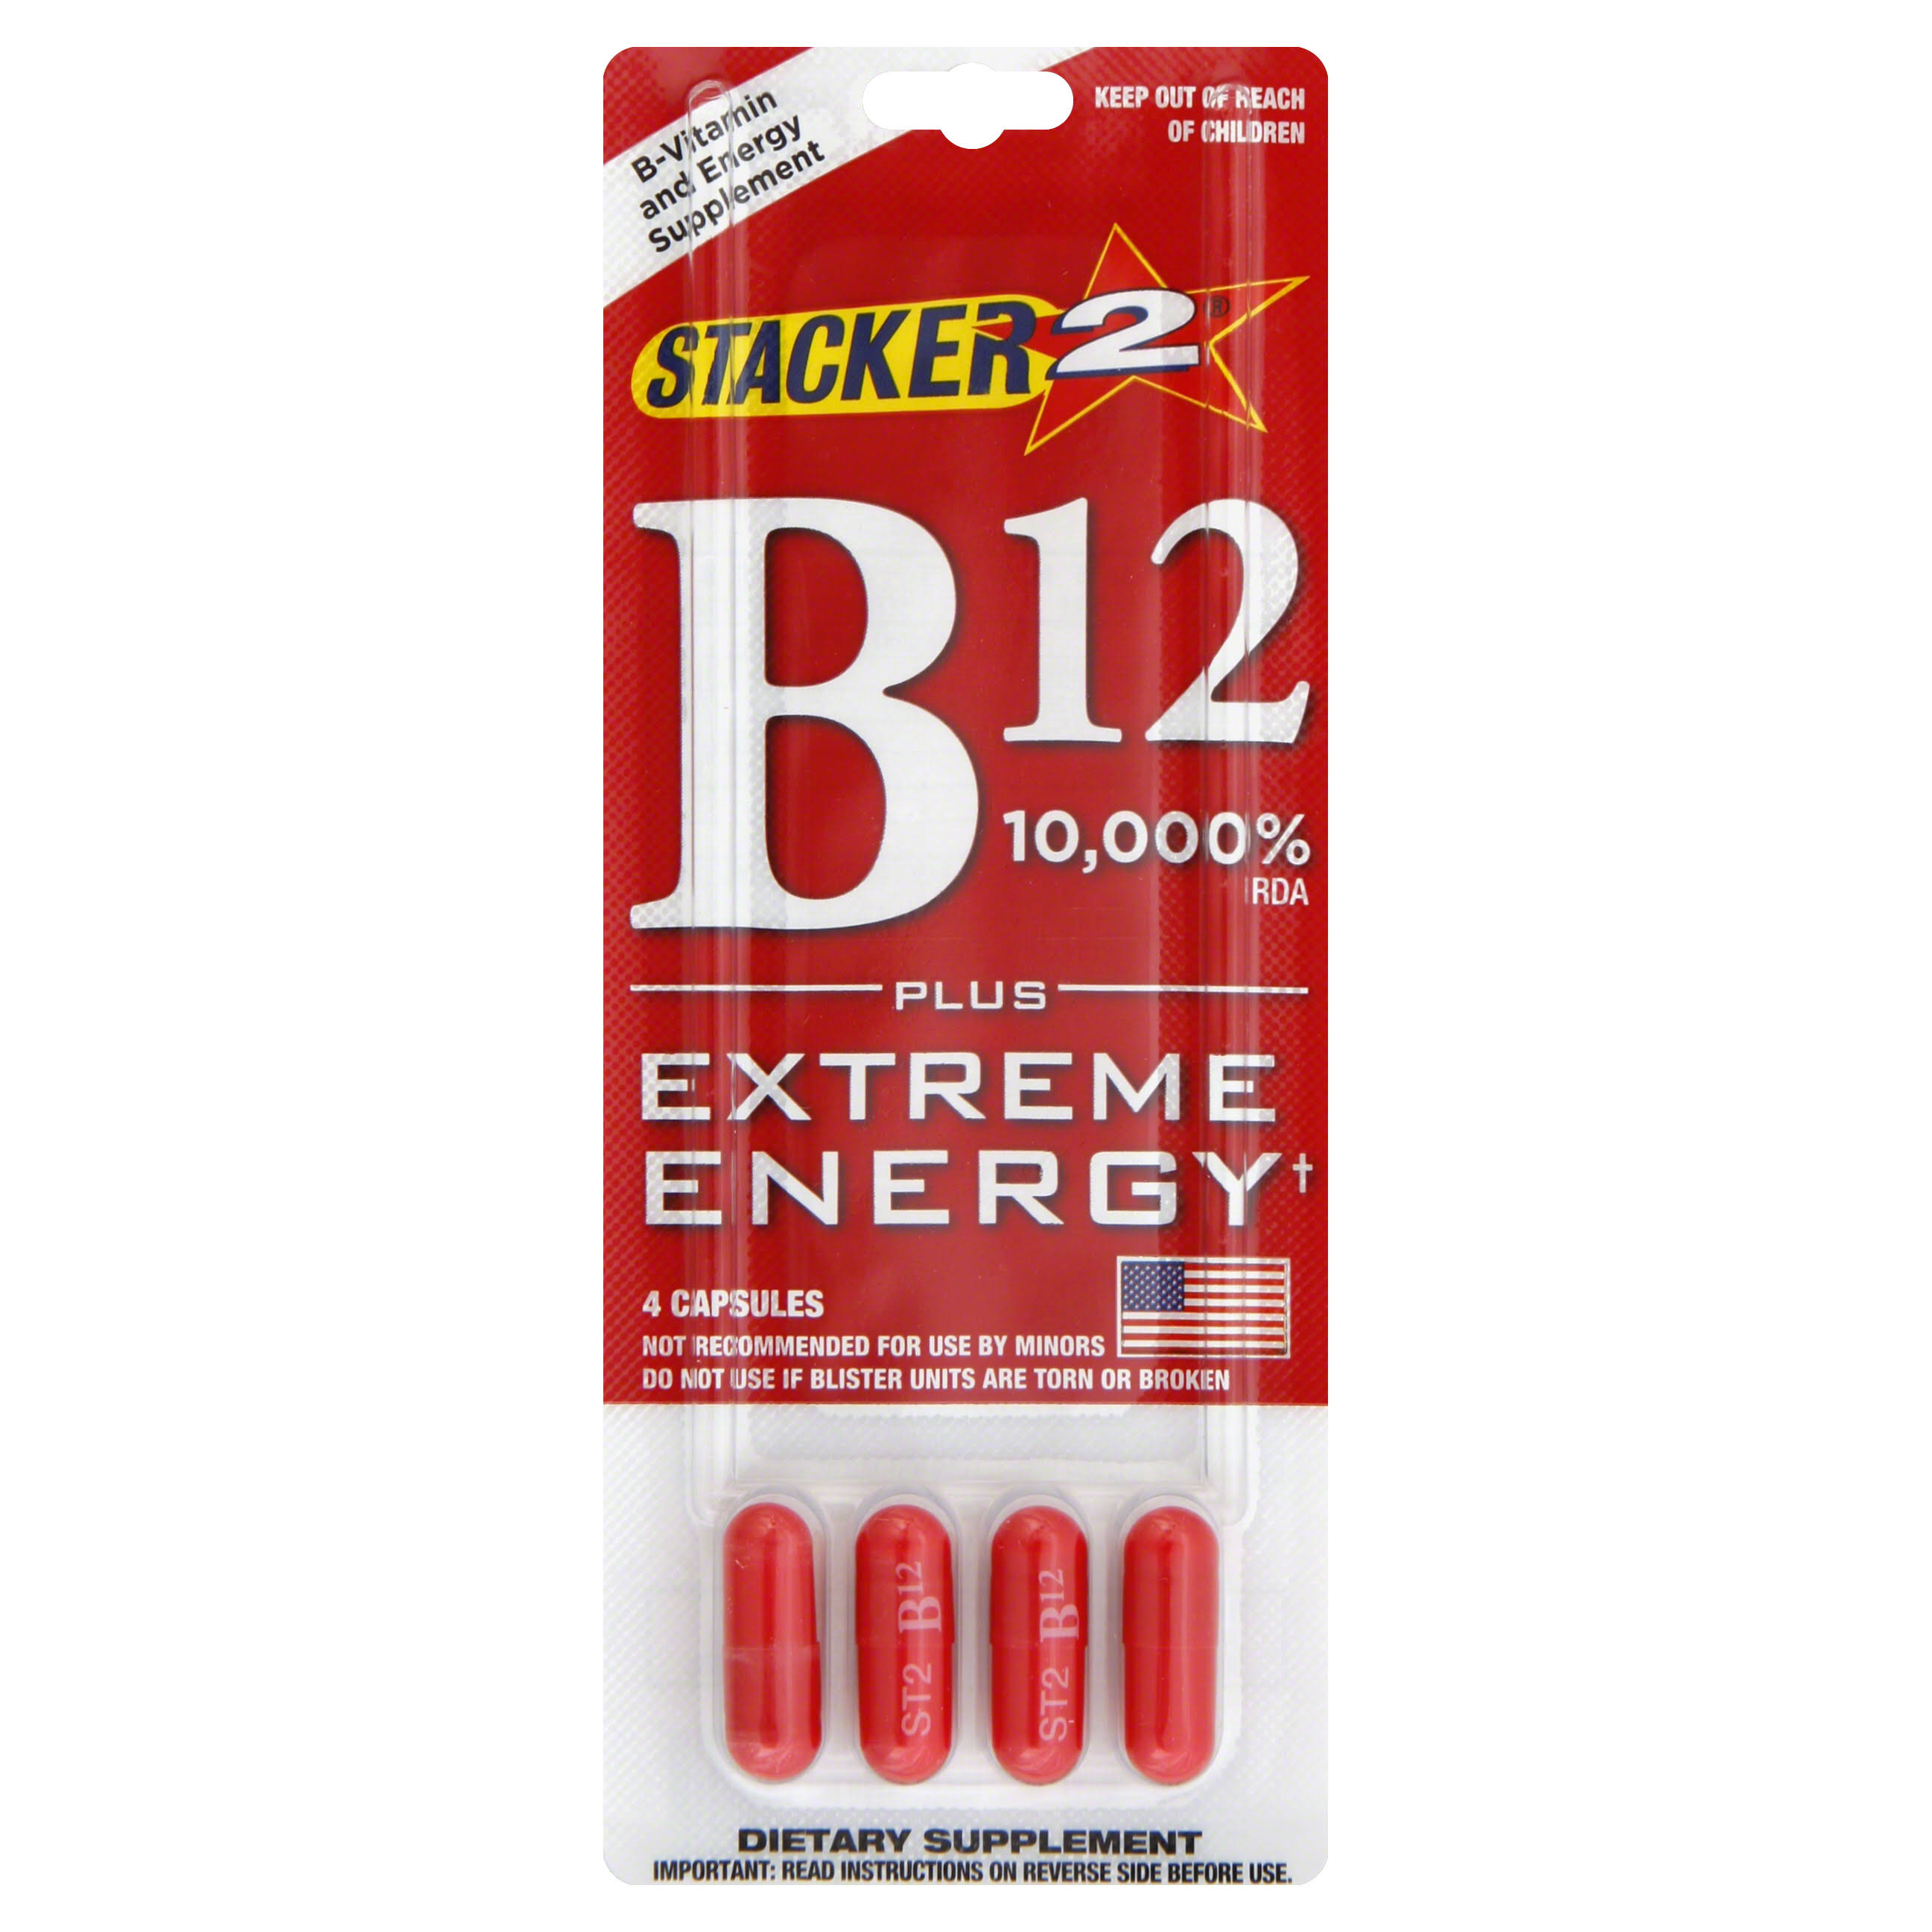 Stacker 2 B12, Plus Extreme Energy, Capsules - 4 capsules